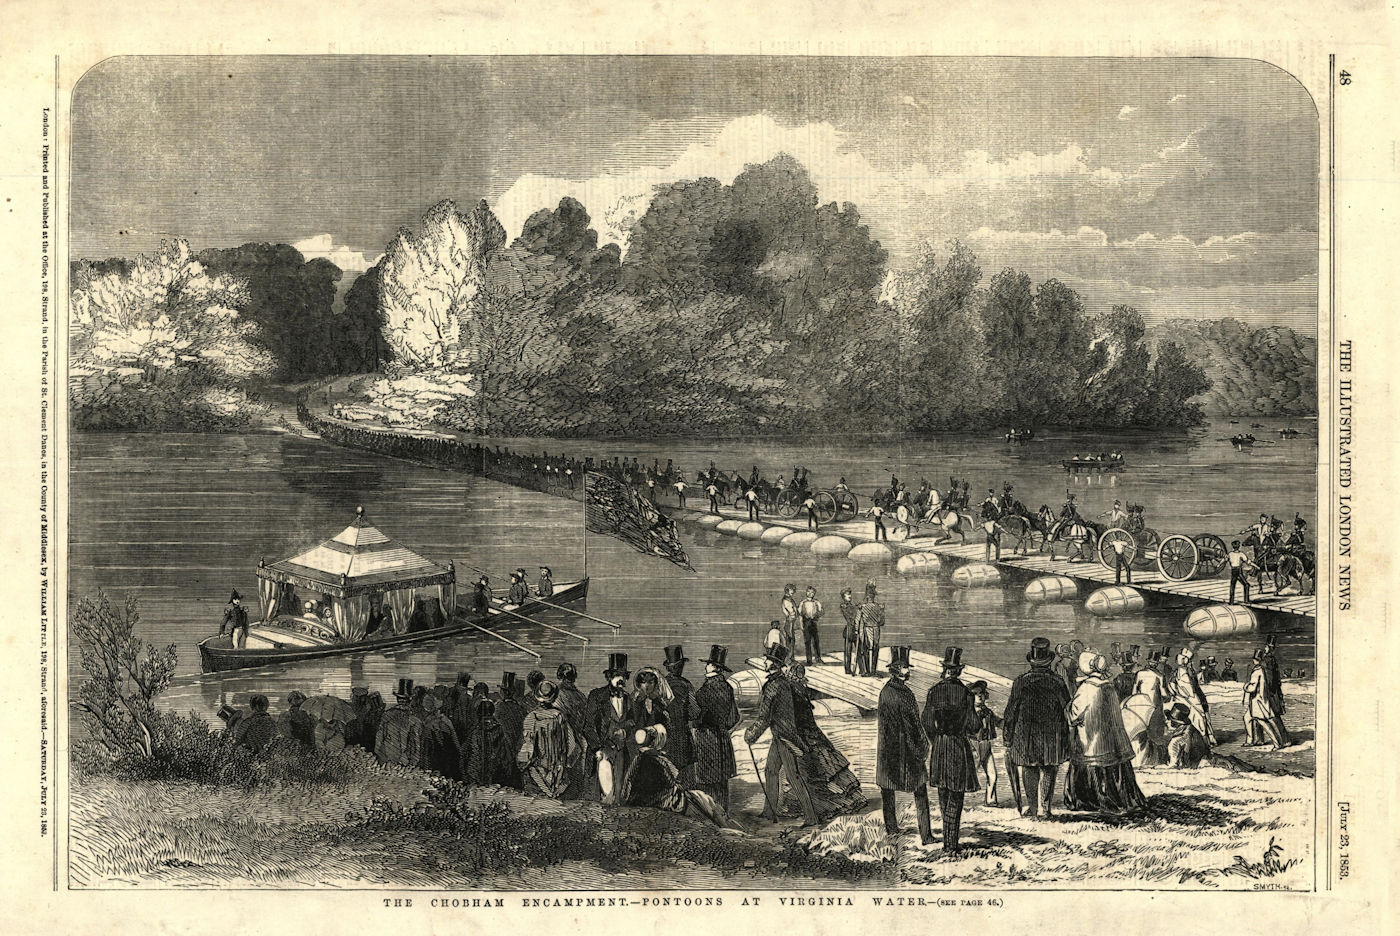 The Chobham encampment - pontoons at Virginia Water. Surrey. Militaria 1853